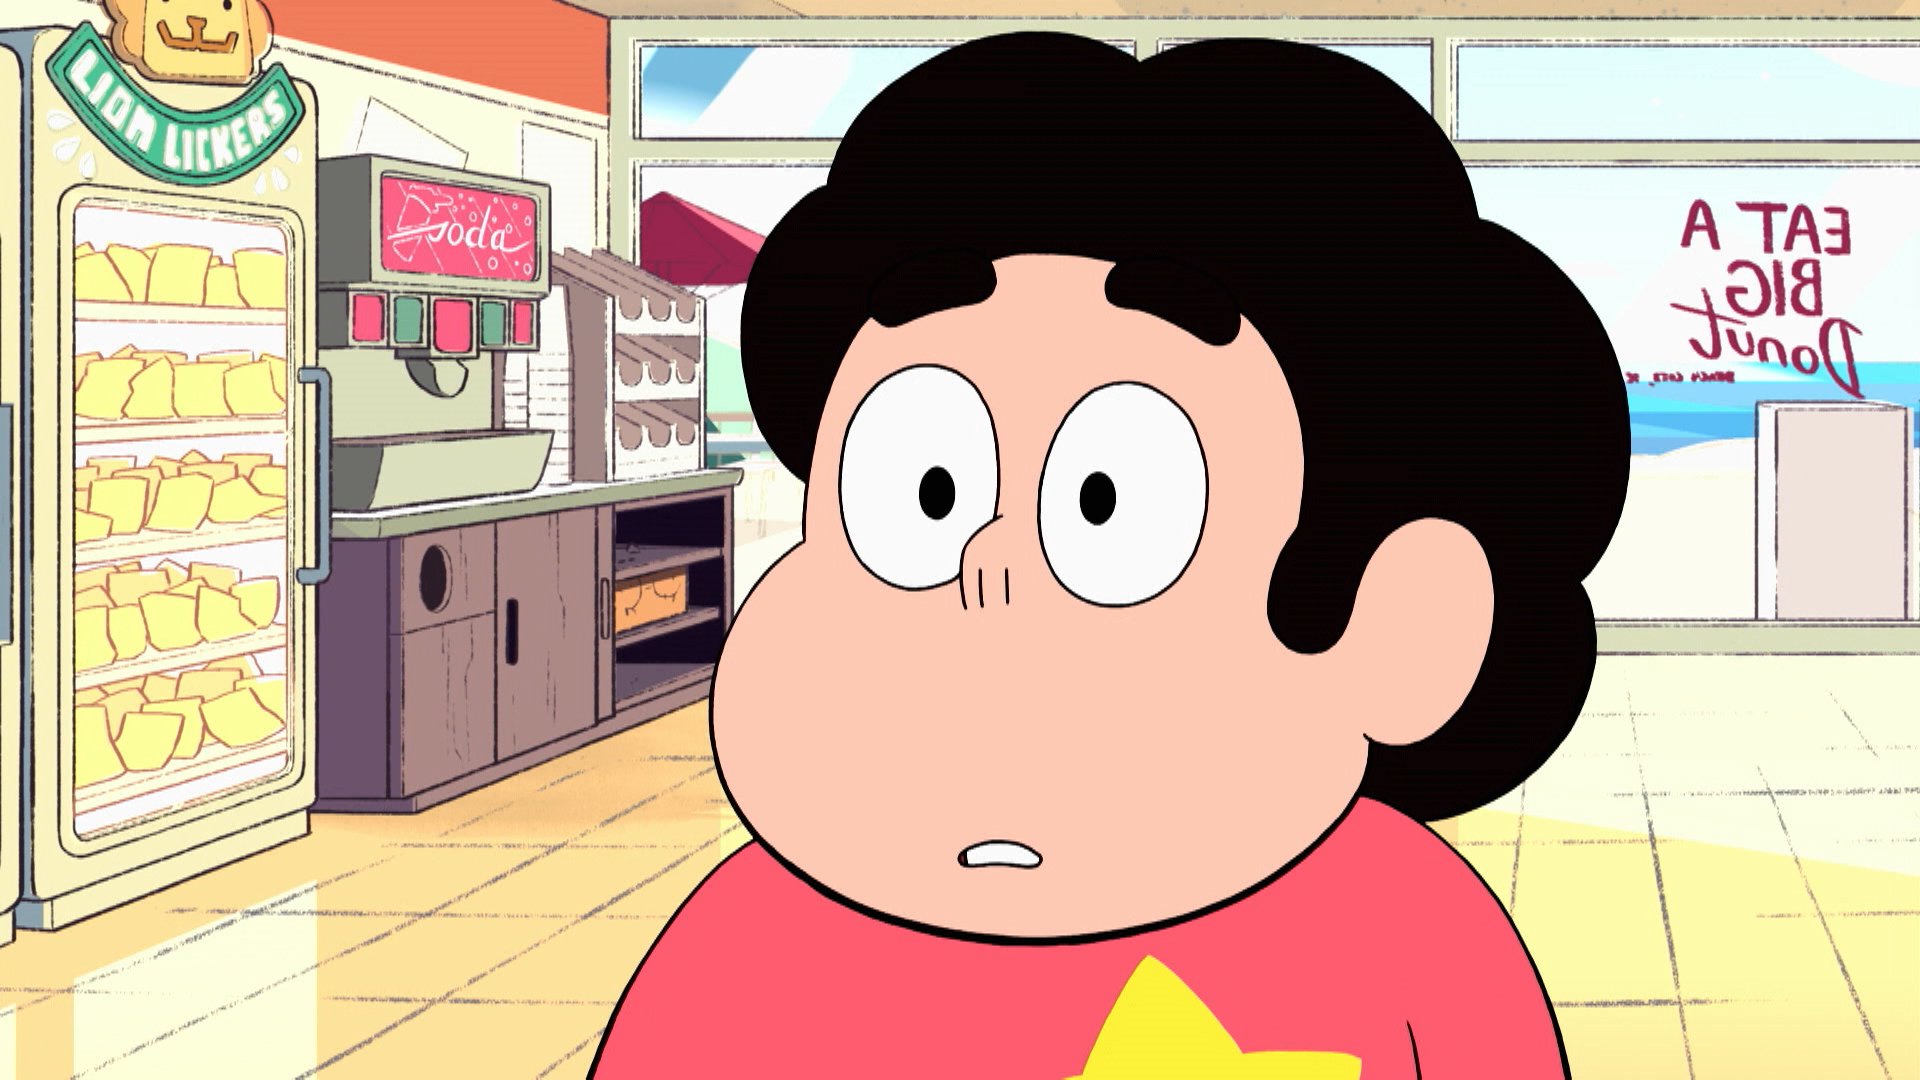 Steven Universe Season 4 - watch episodes streaming online